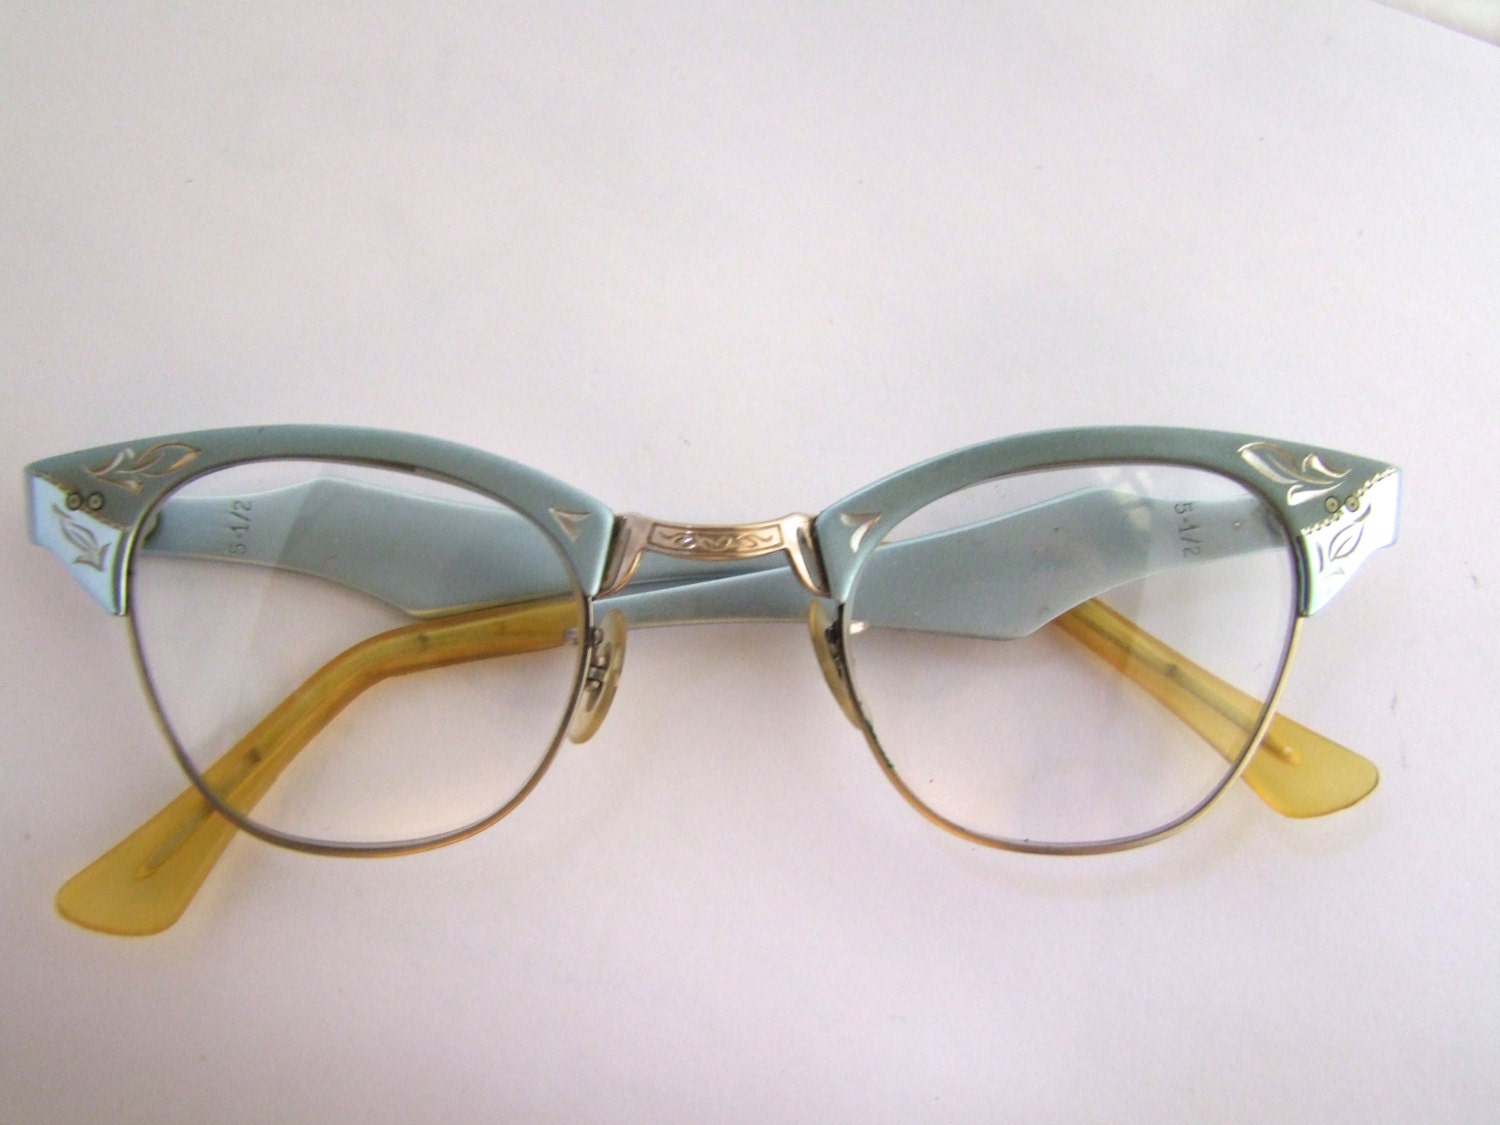 cateye glasses frames near me